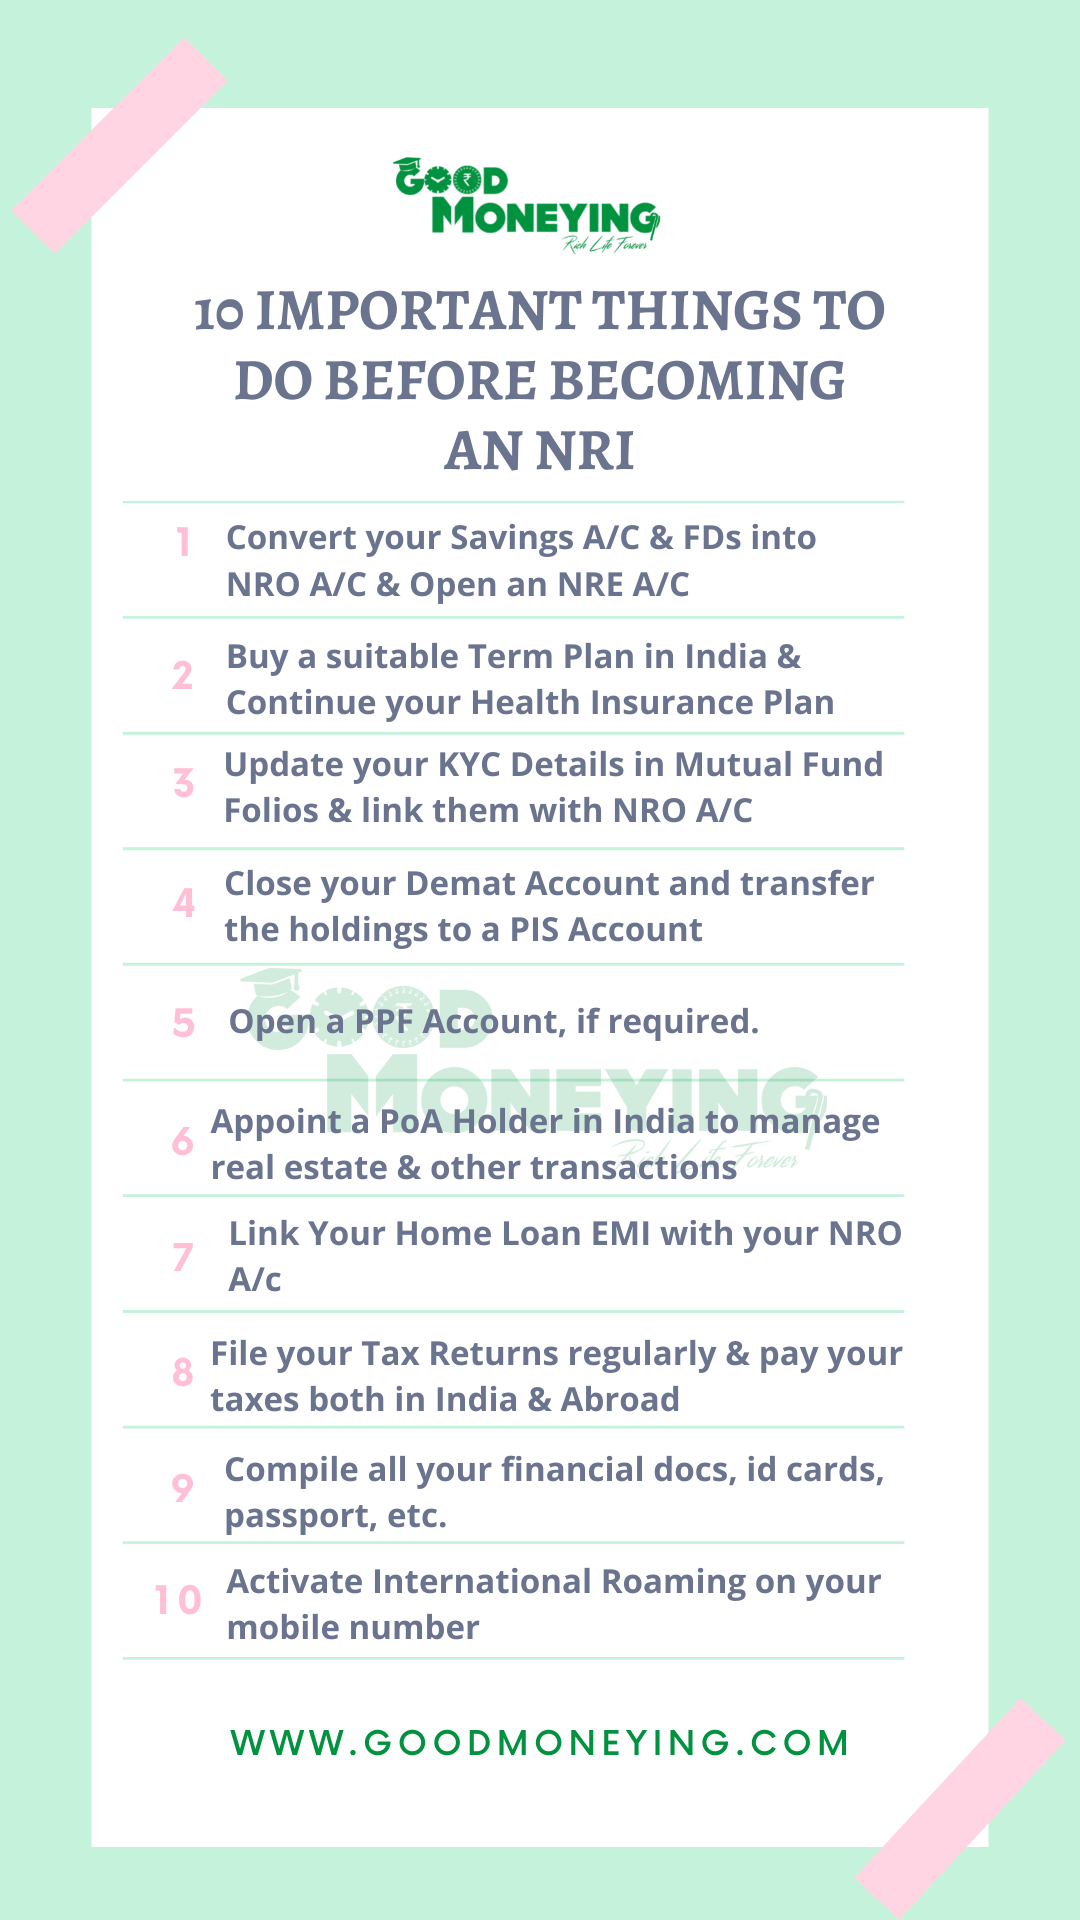 Items on NRI Checklist